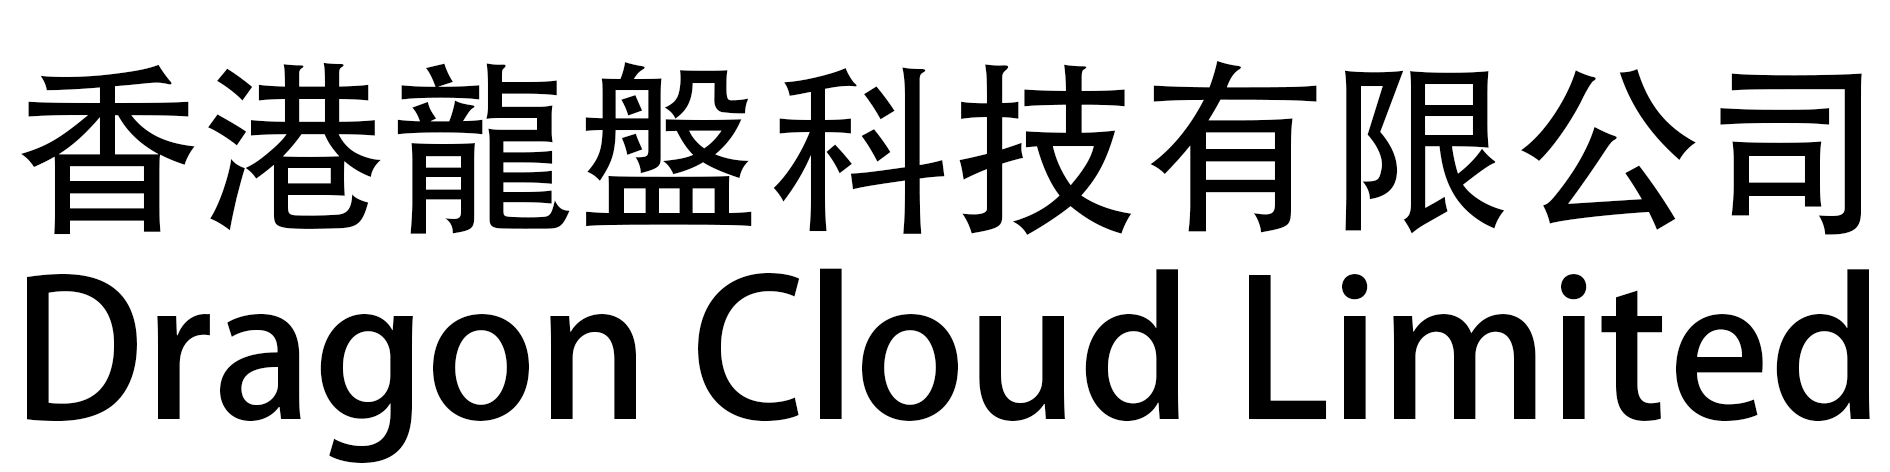 Dragon Cloud Limited